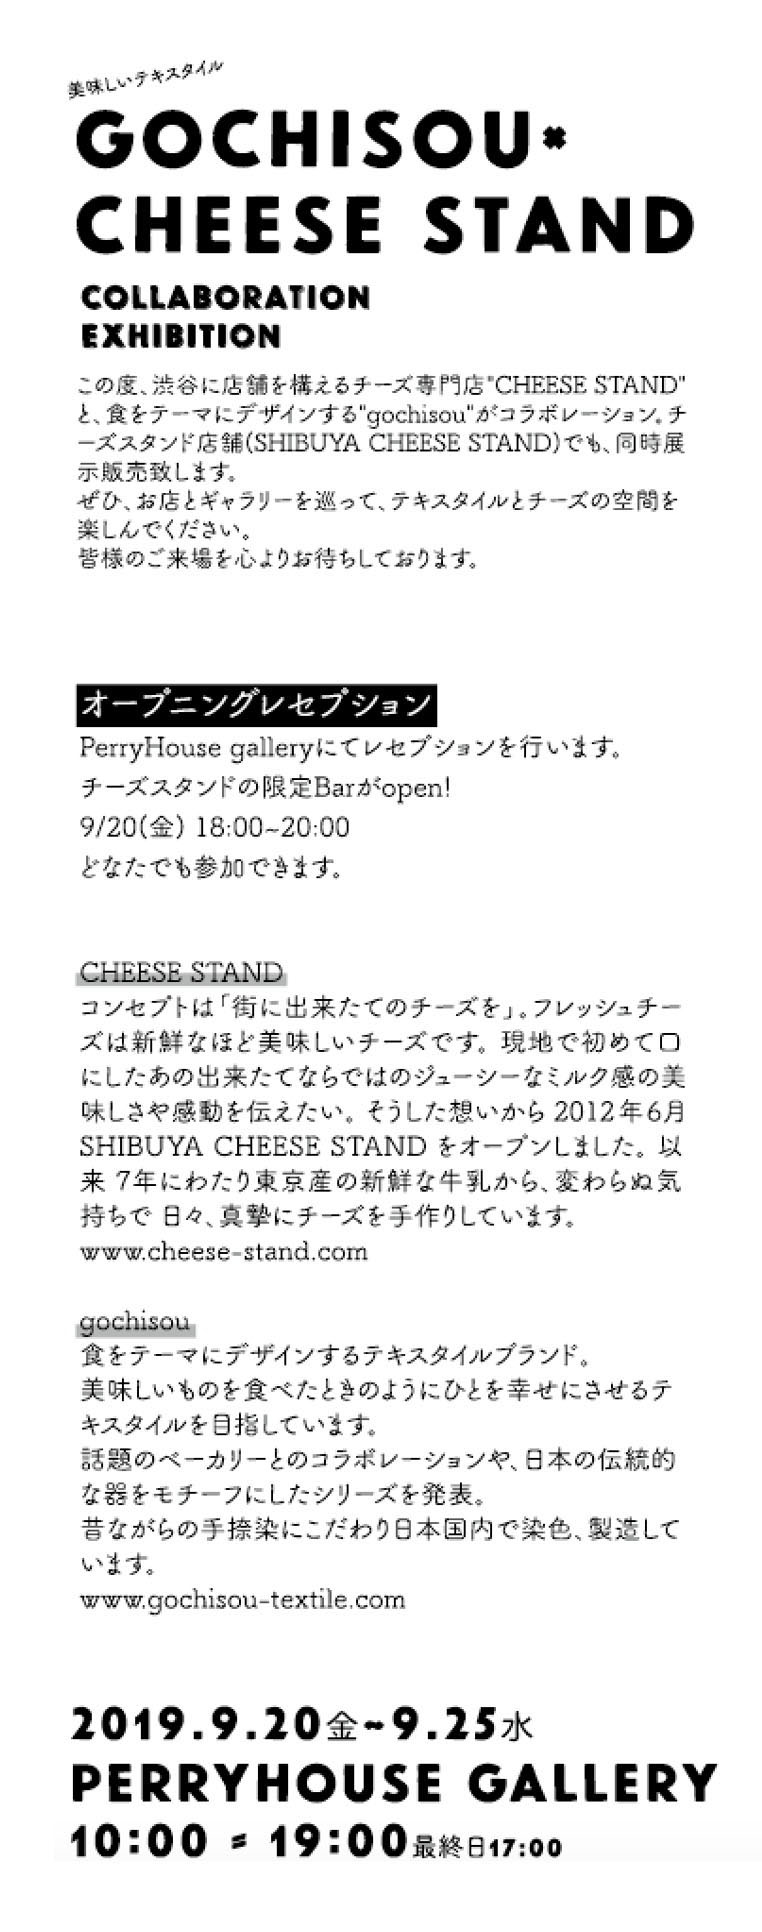 GOCHISOU × CHEESE STAND